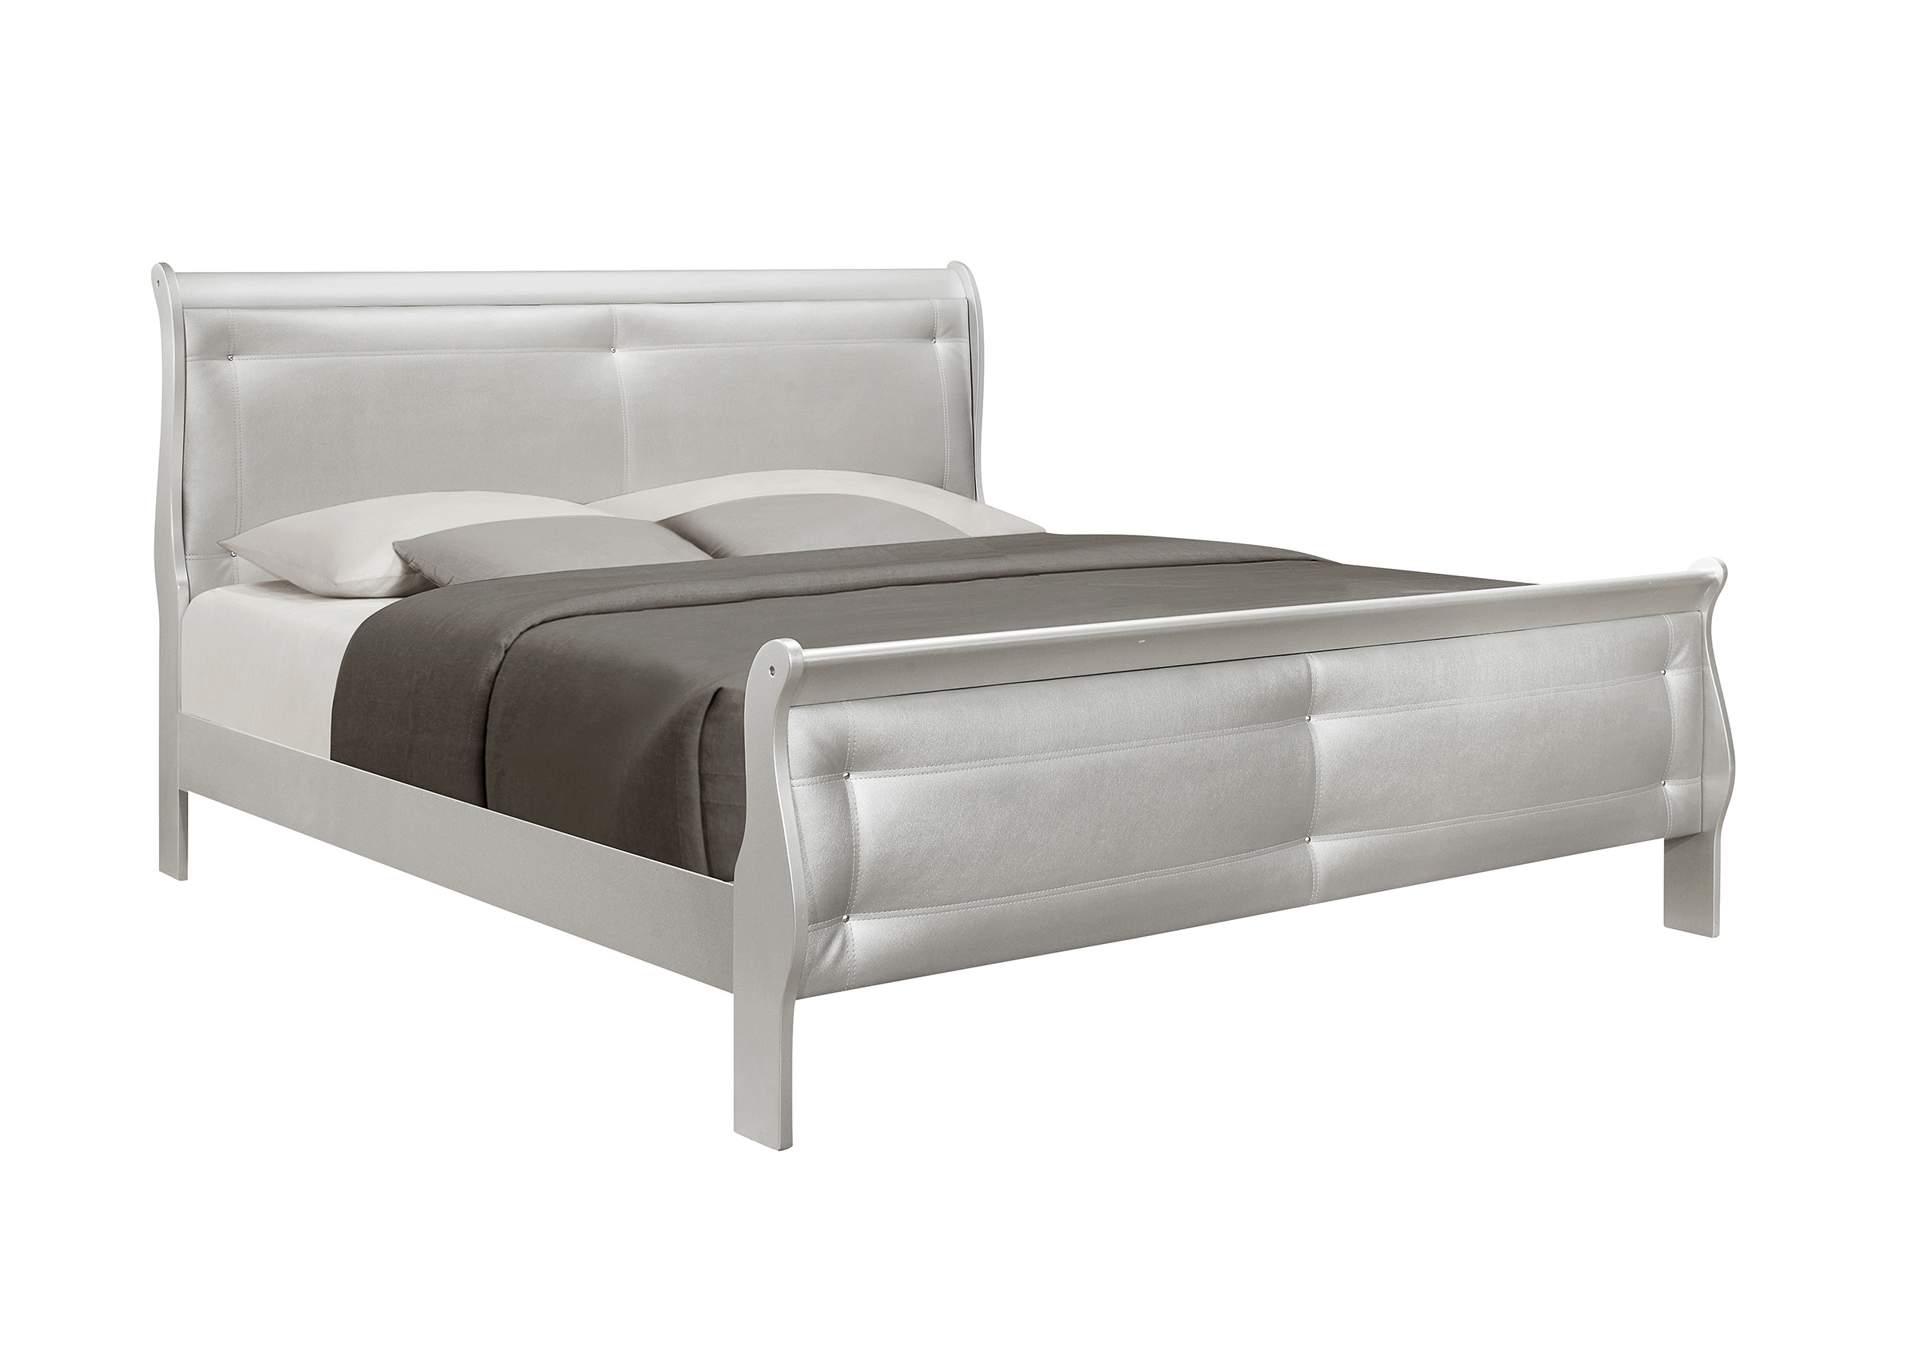 Silver Marley Full Bed,Global Furniture USA